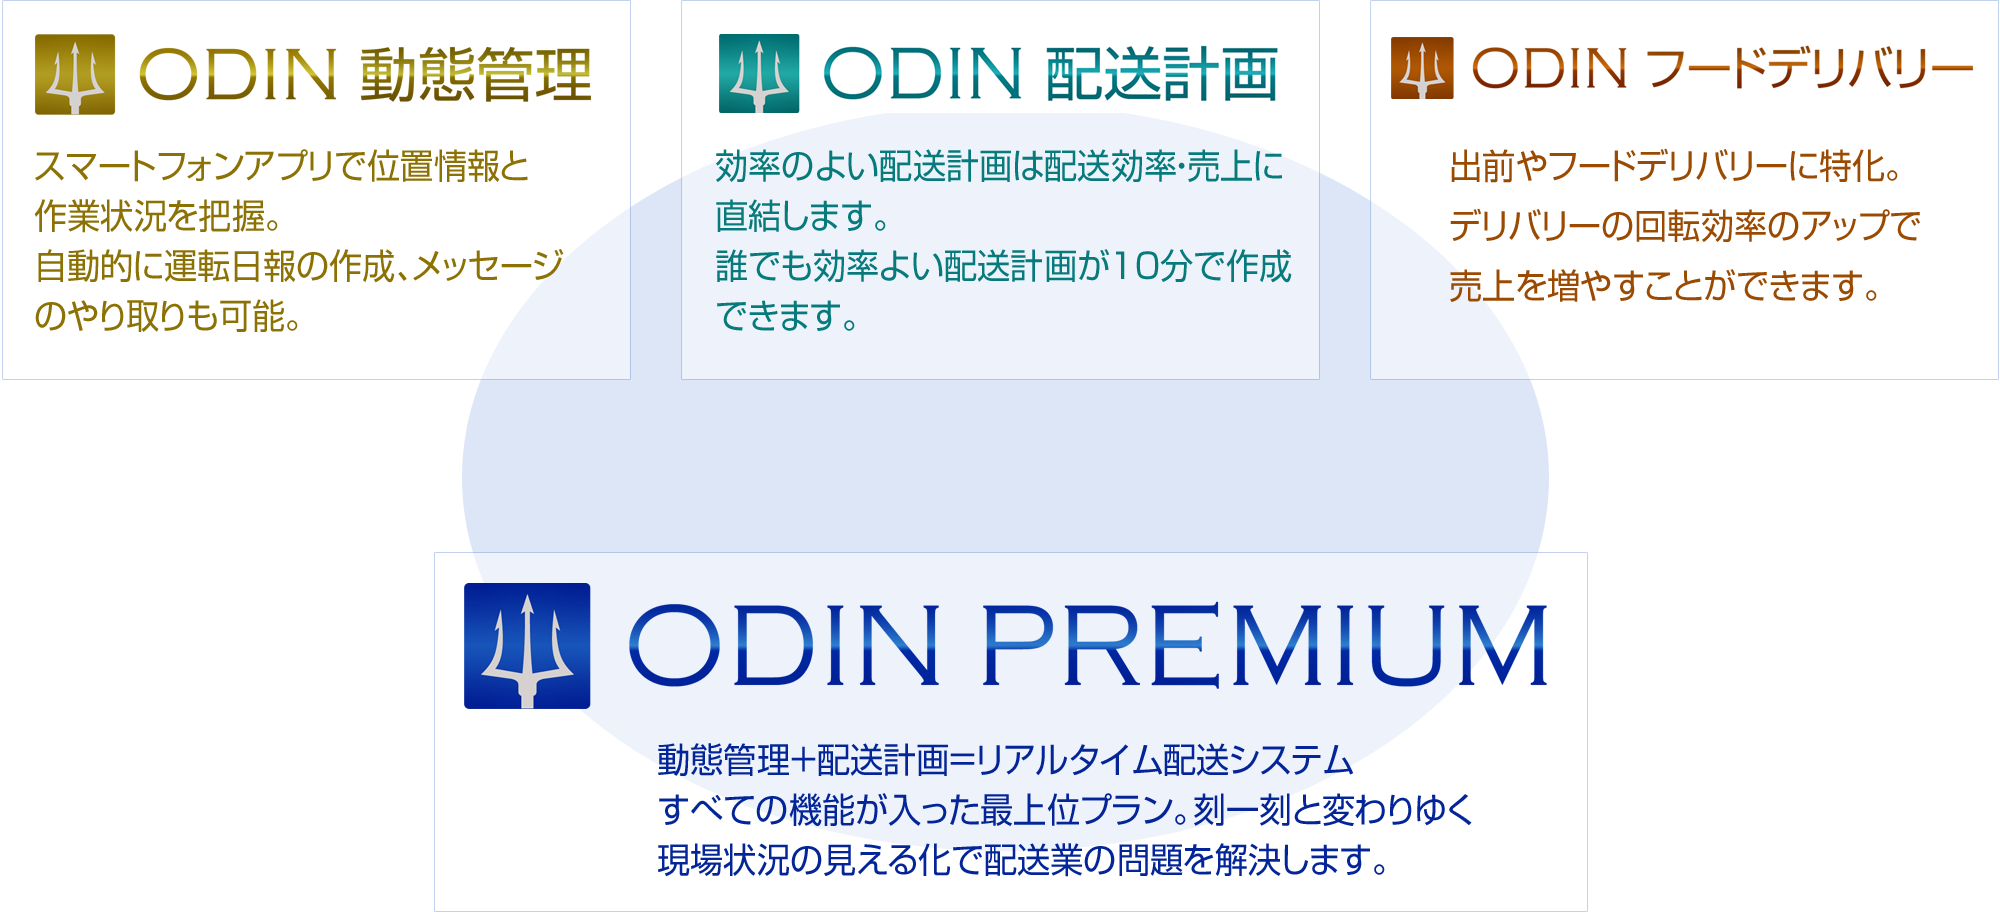 ODINの製品群です。各プランの名前と簡単な特徴を記載しています。